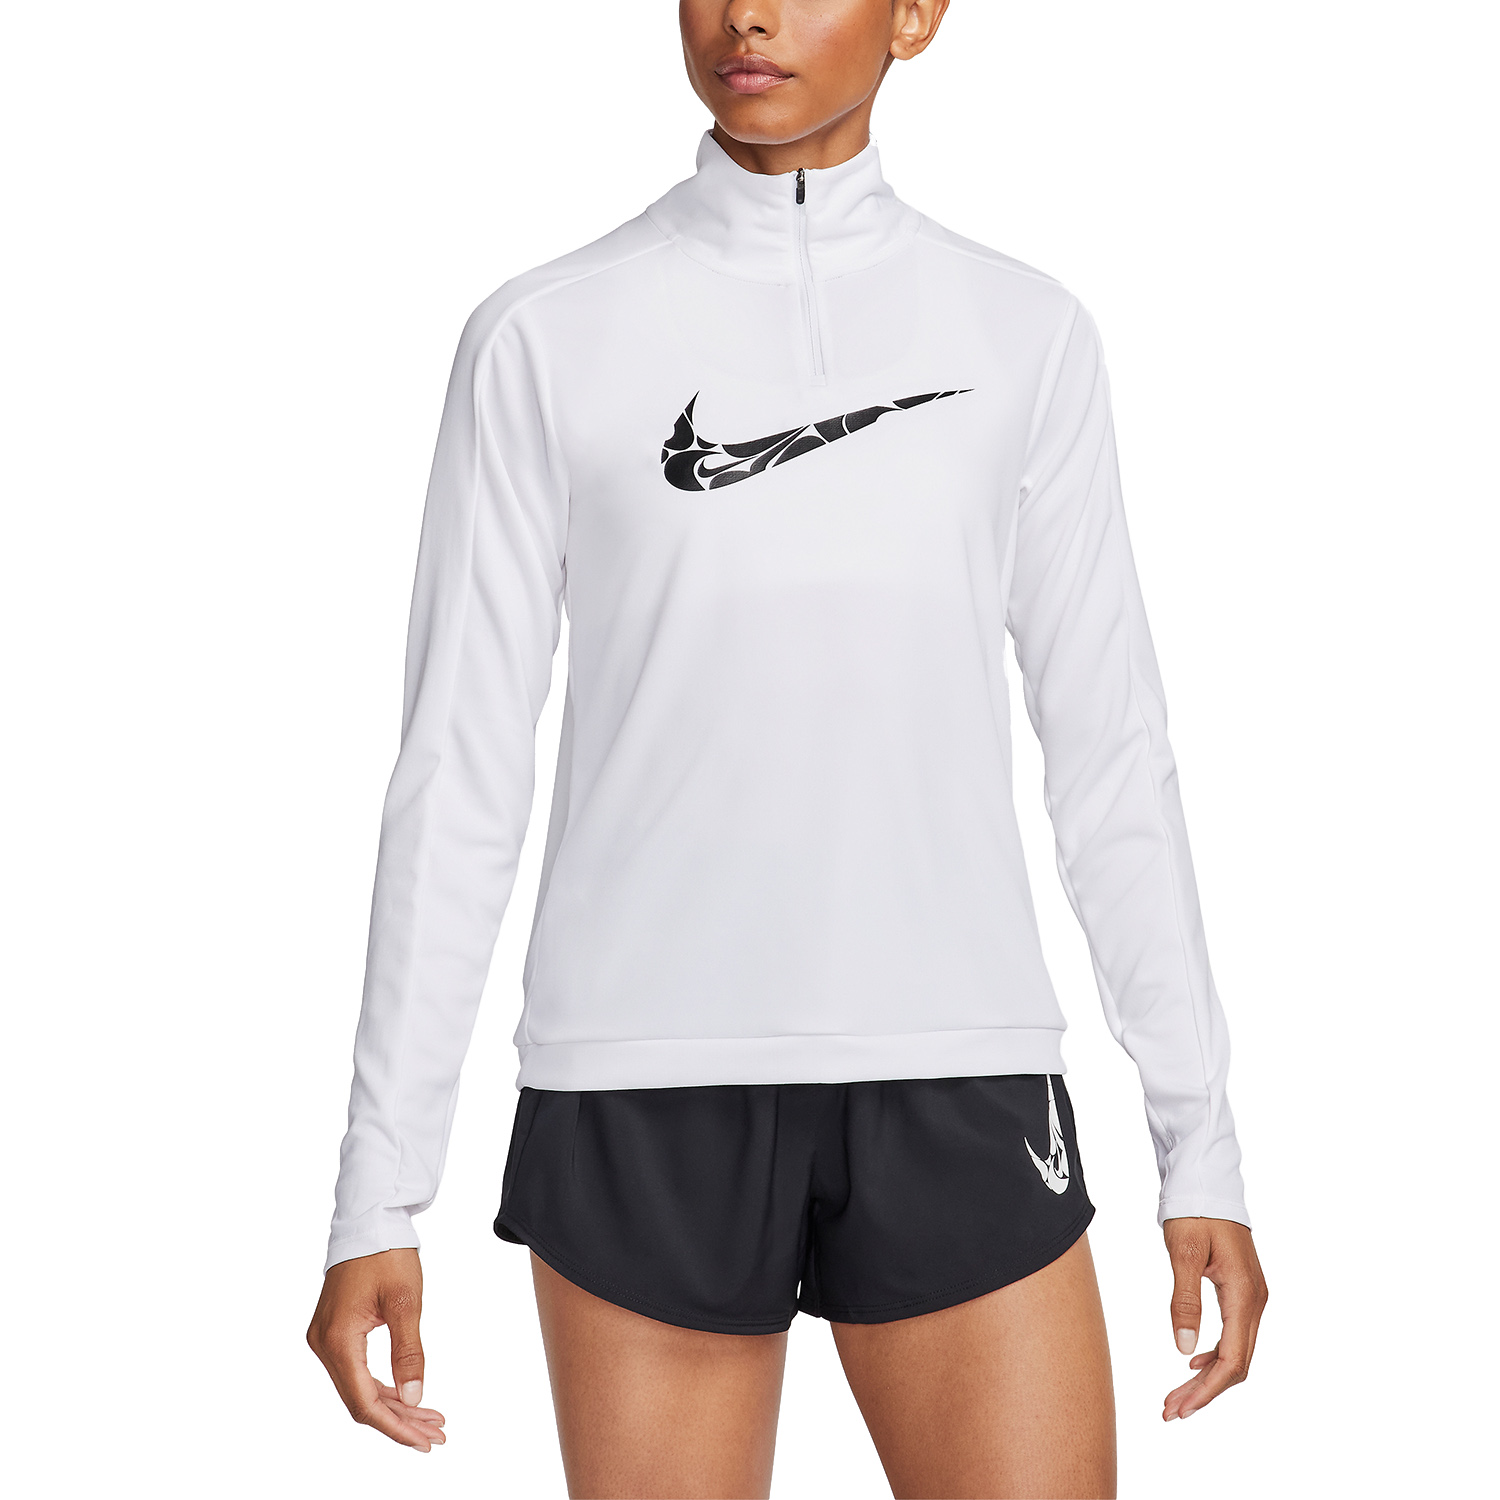 Nike Swoosh Shirt - White/Black